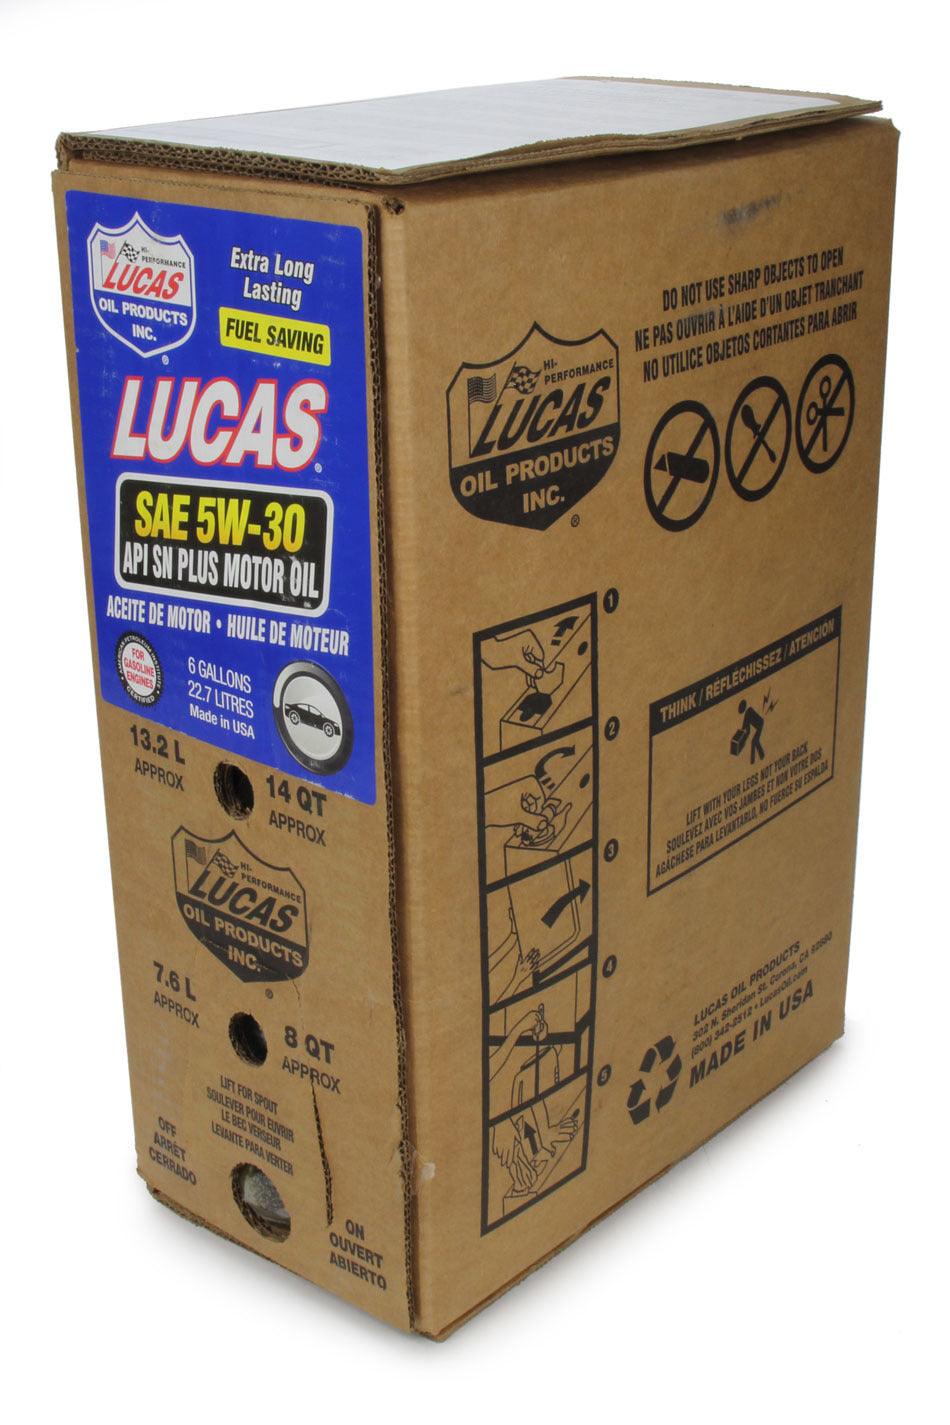 SAE 5W30 Motor Oil 6 Gallon Bag In Box - Burlile Performance Products